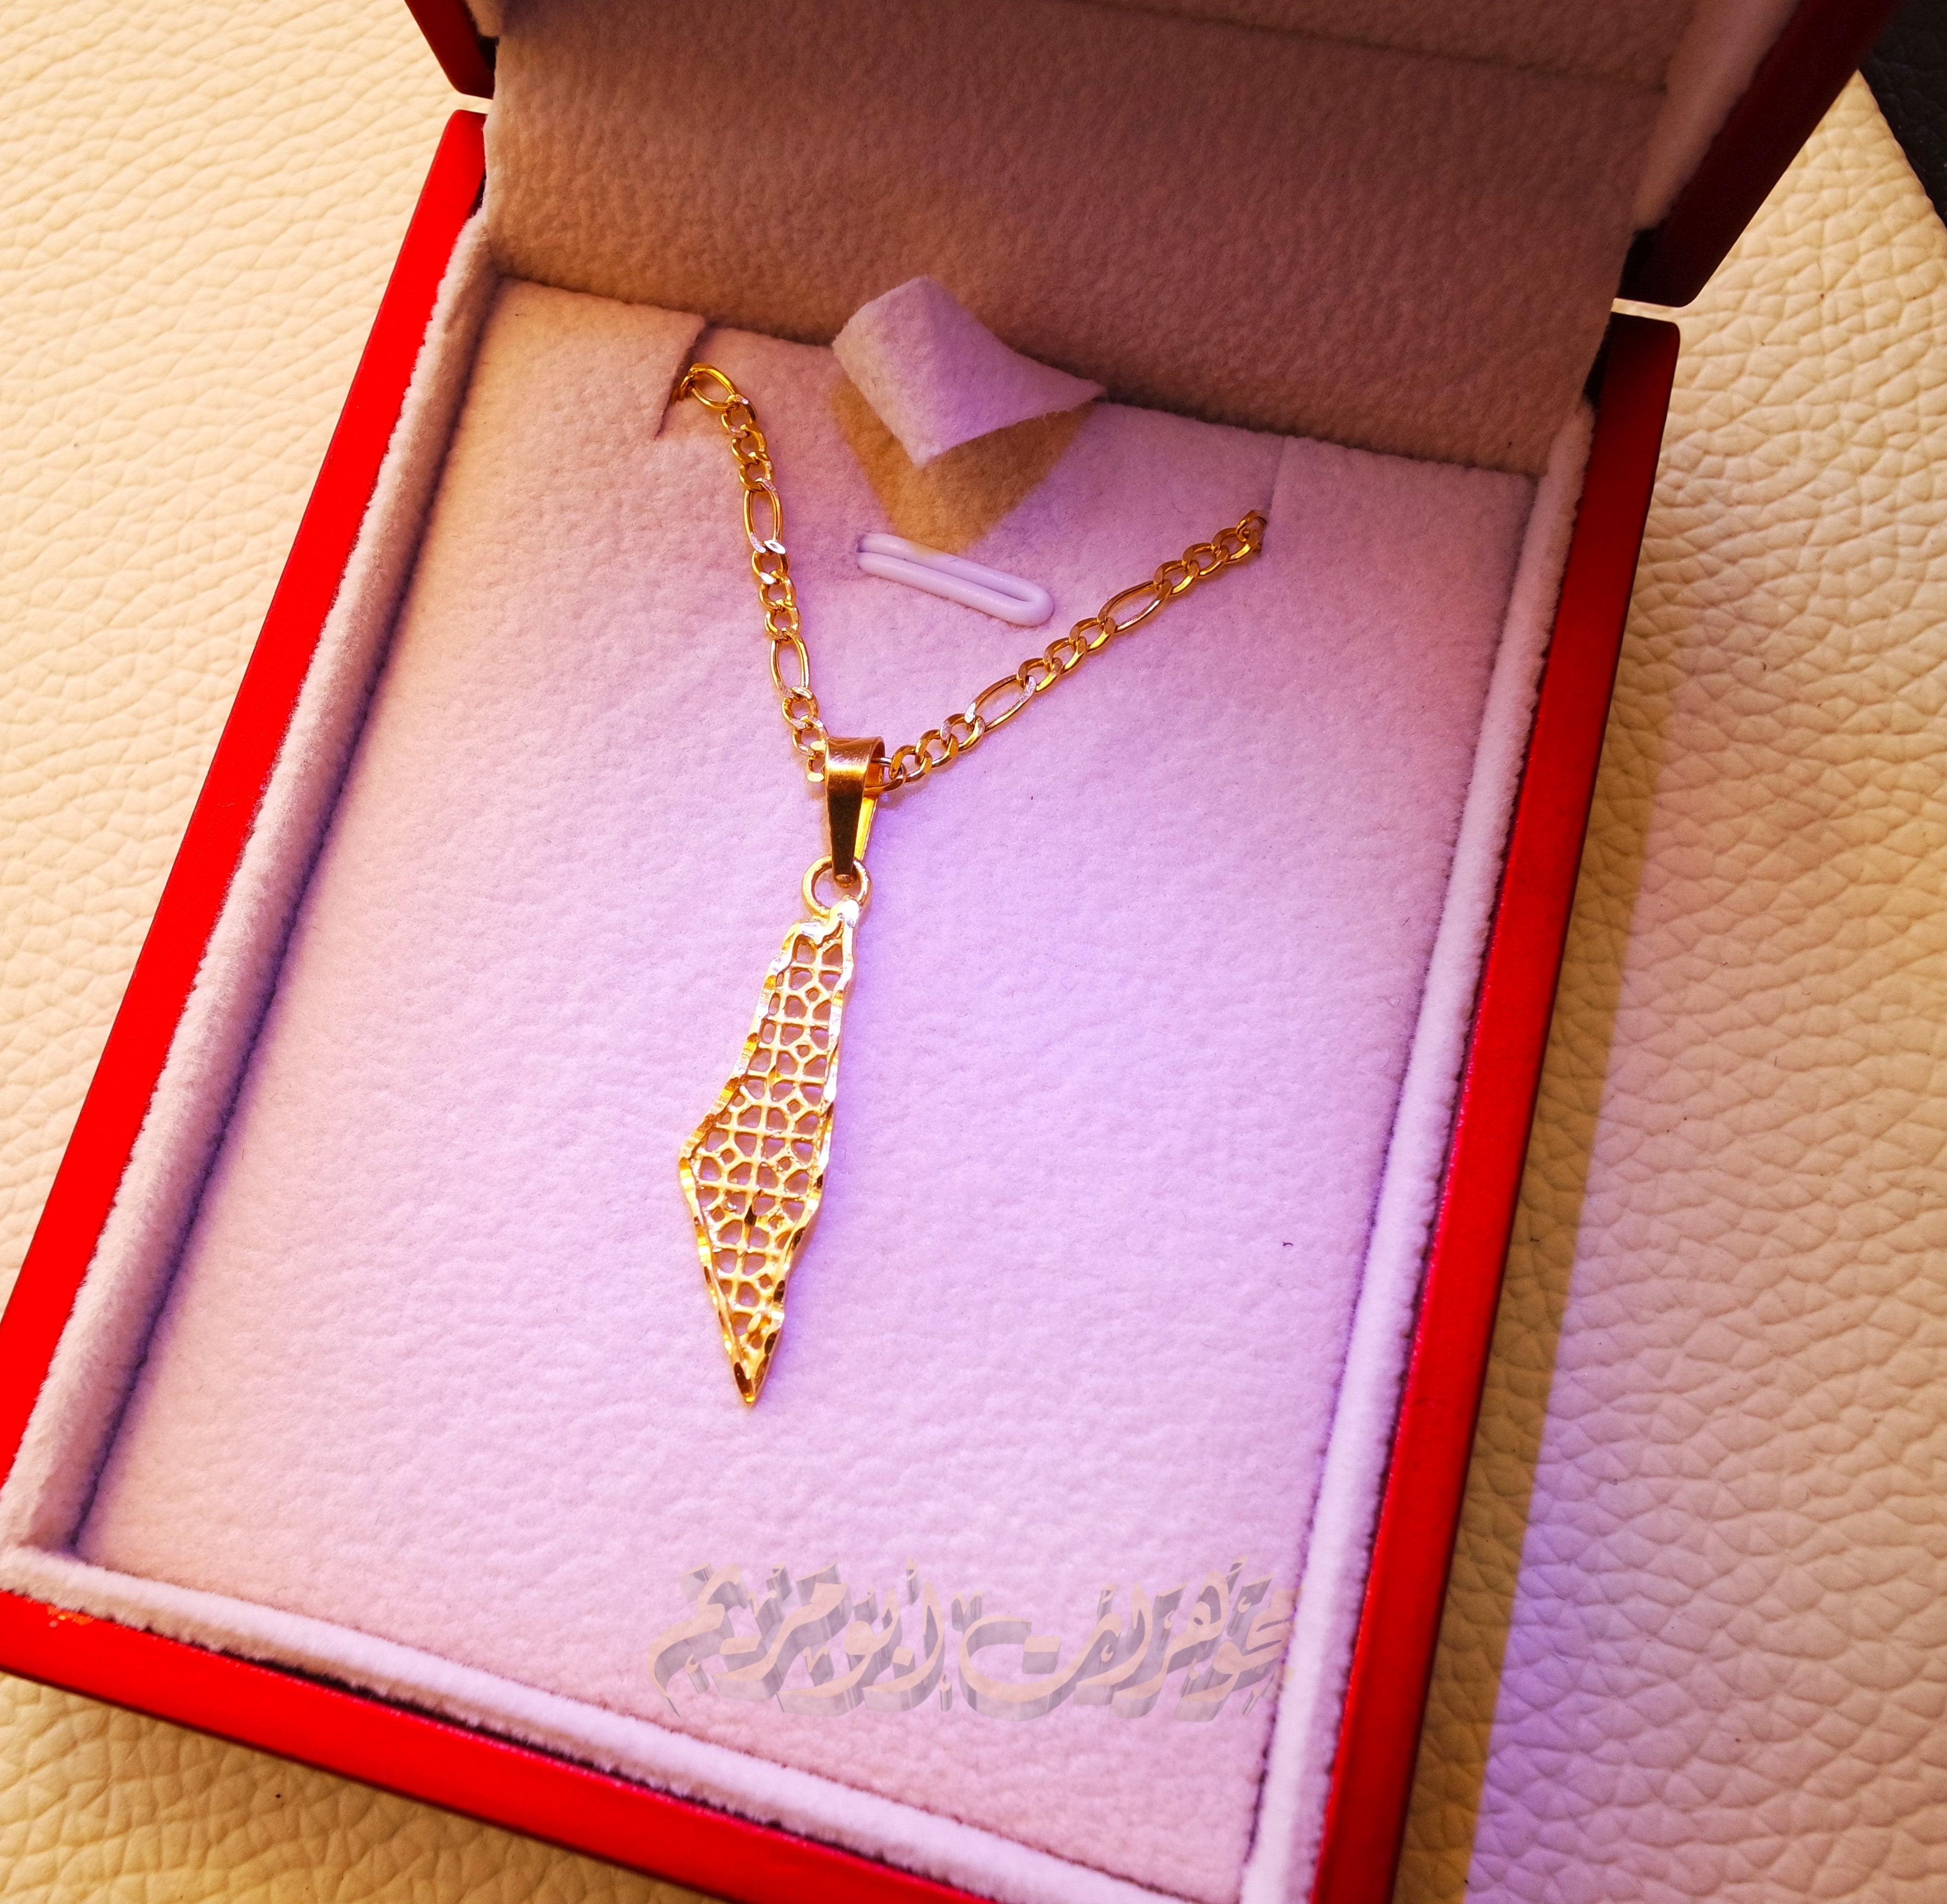 21K gold Palestine map pendant with filigree chain gold jewelry Arabic fast shipping 2 sizes خارطه و علم فلسطين